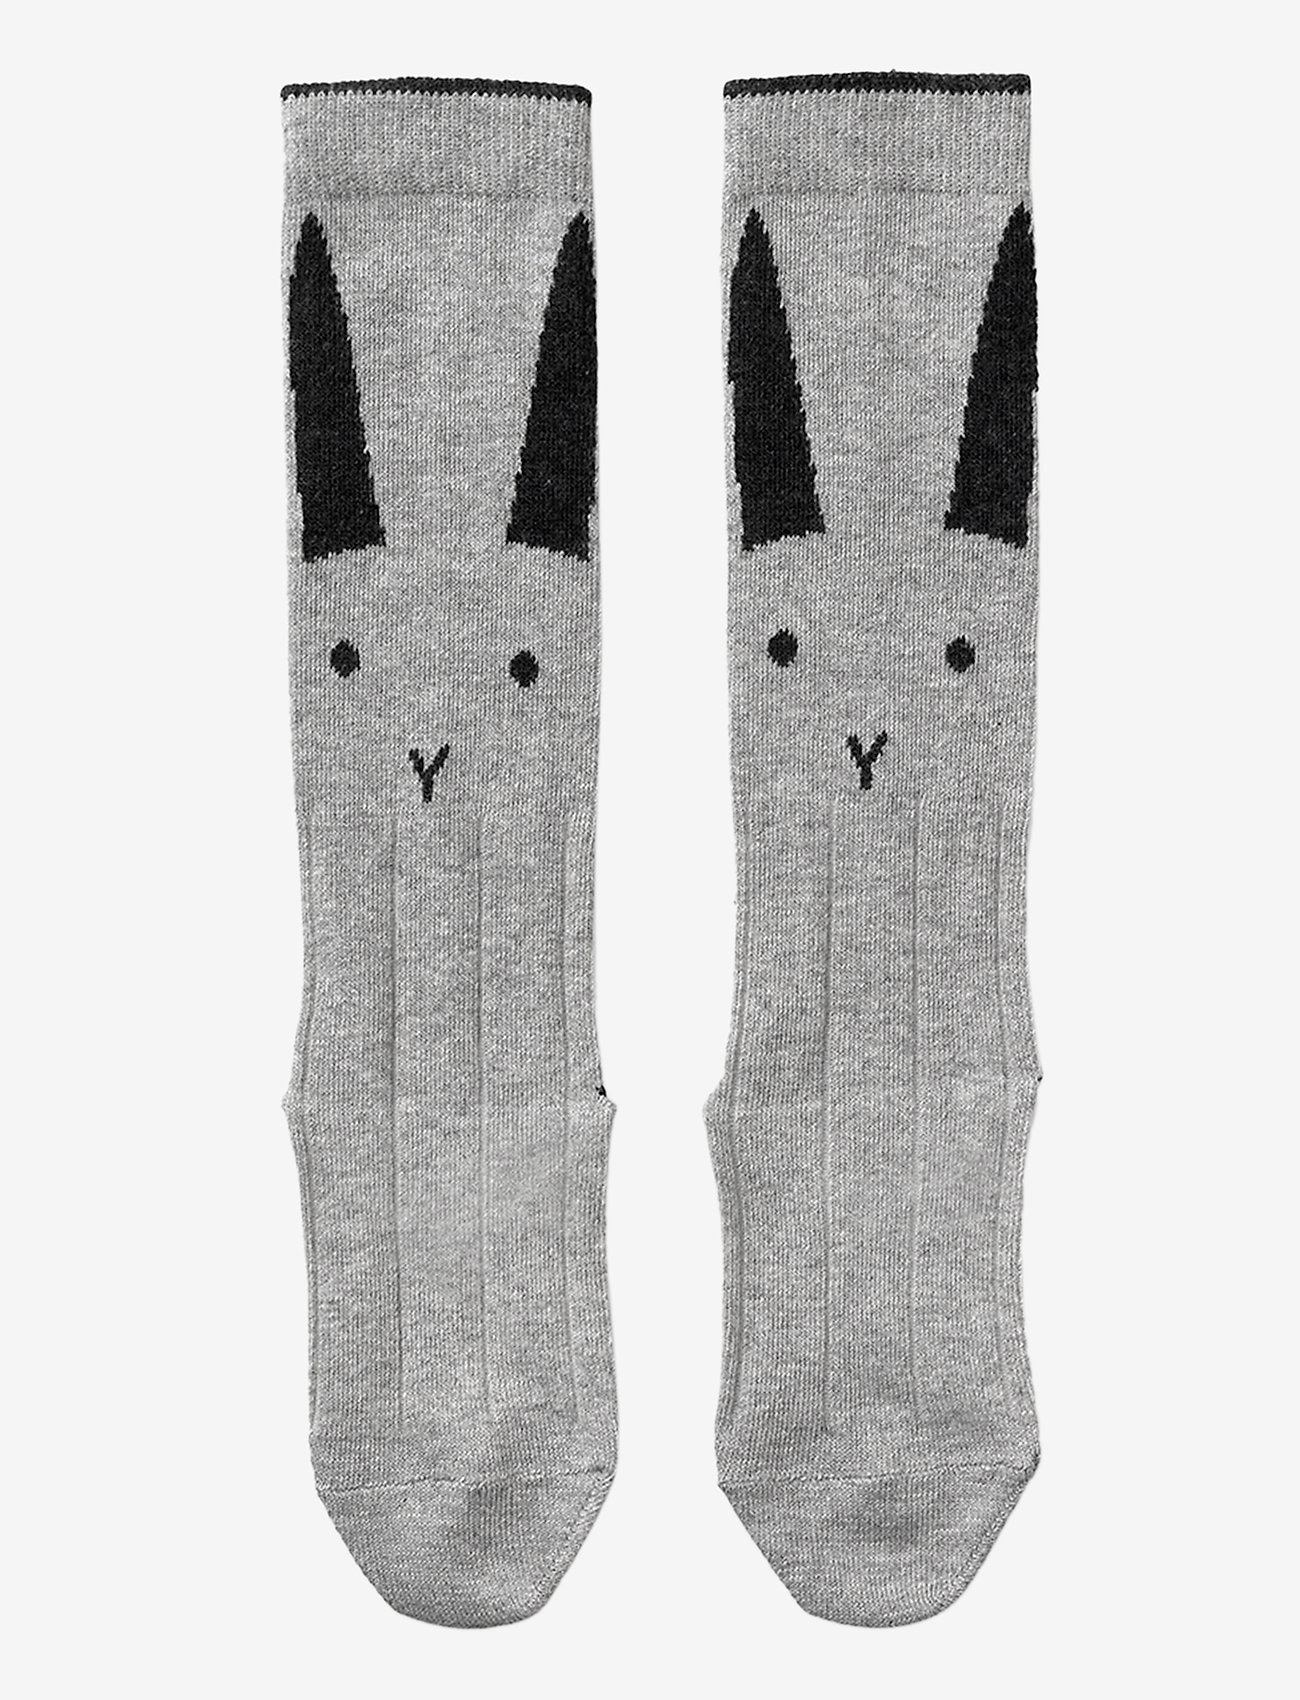 Liewood - Sofia cotton knee socks - 2 pack - sokker - rabbit grey melange - 0